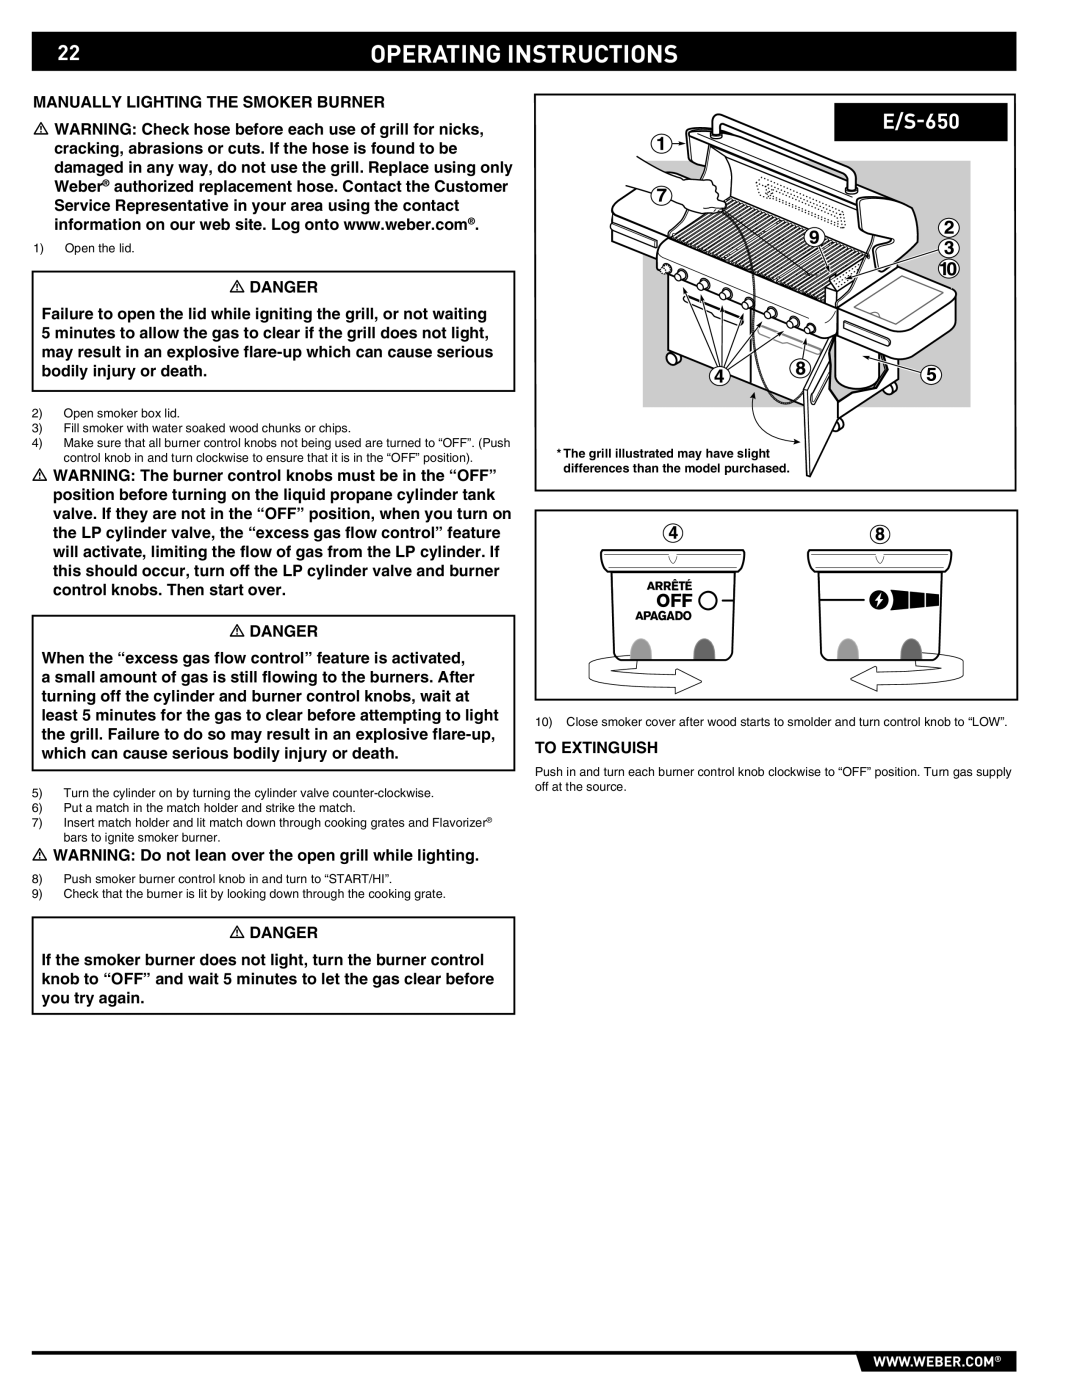 Summit E/S-620/650 manual Manually Lighting the Smoker Burner 